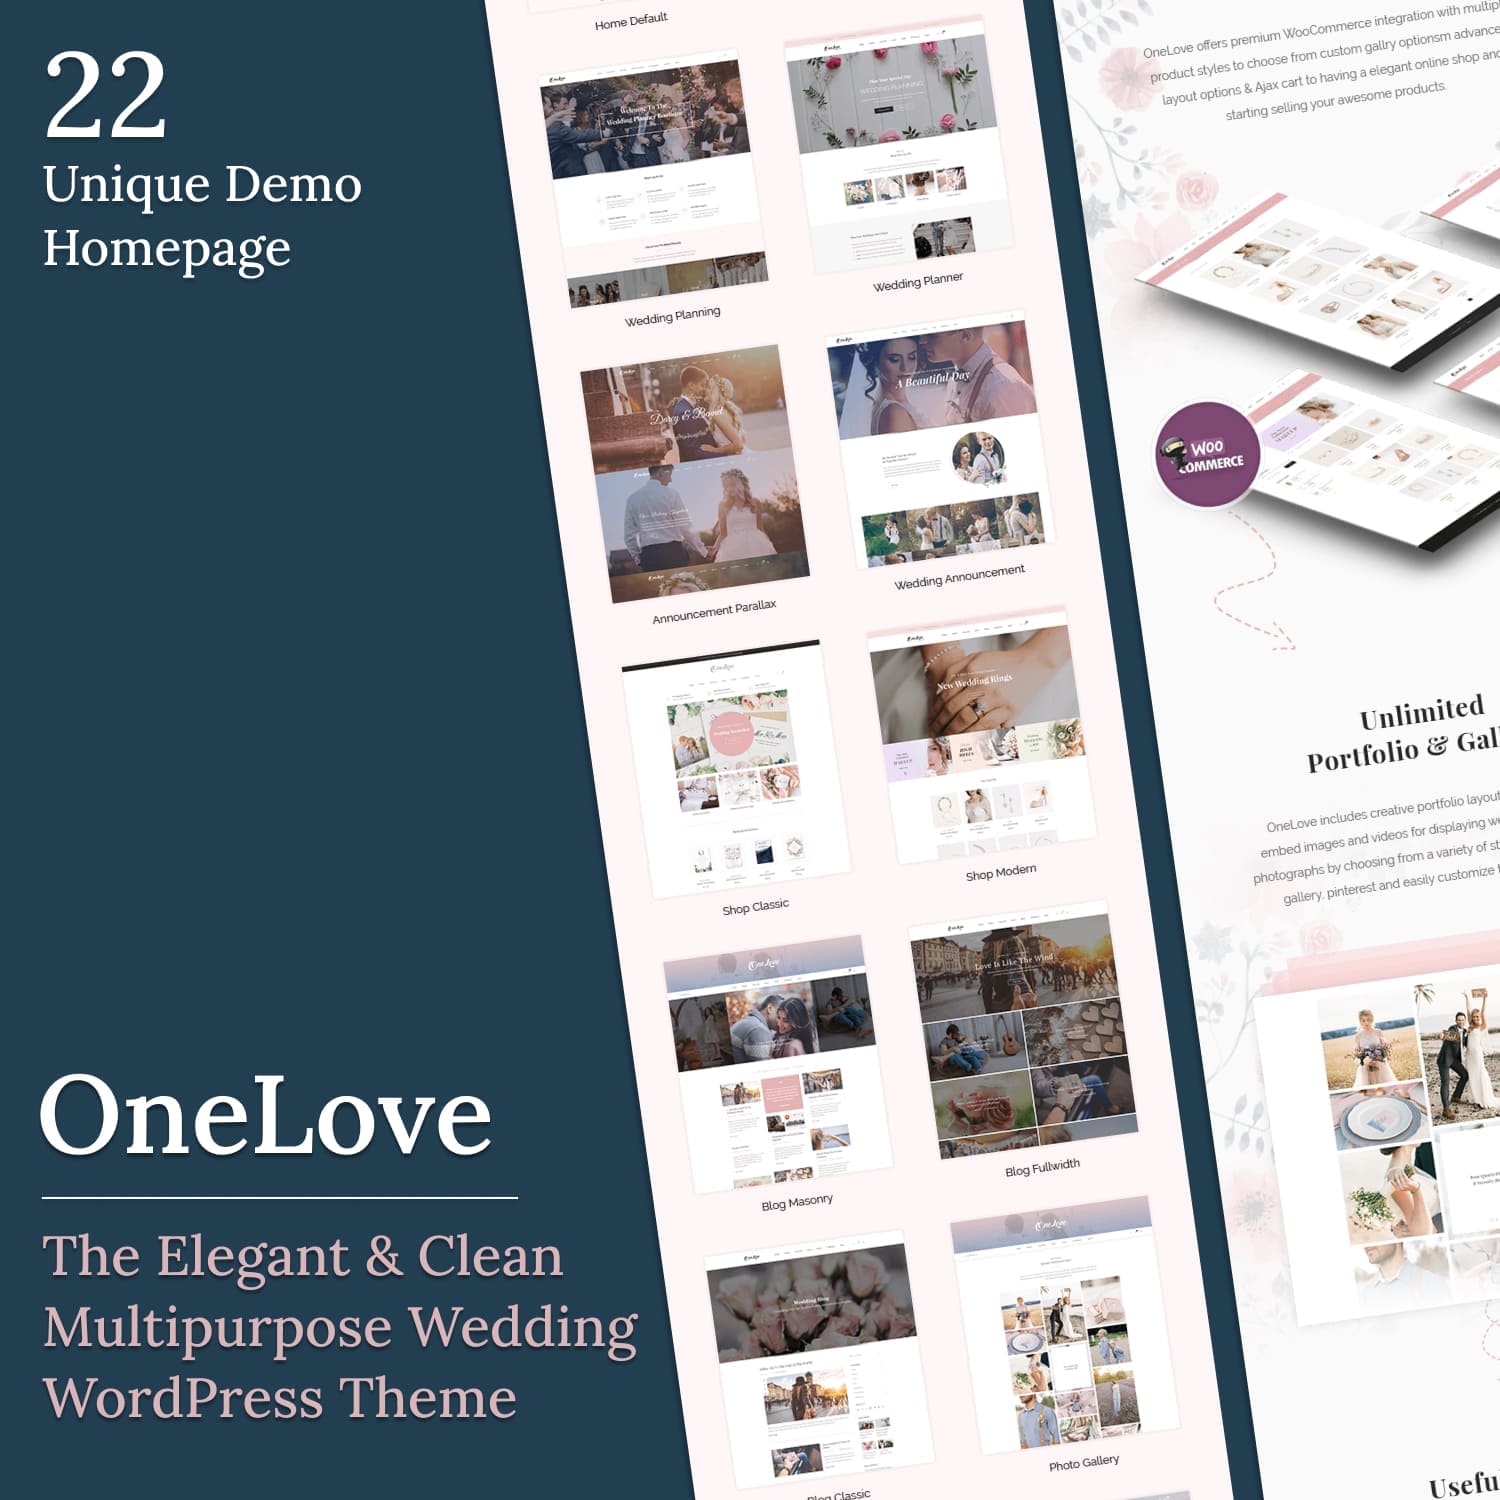 Onelove the elegant clean multipurpose wedding wordpress theme, main picture 1500x1500.